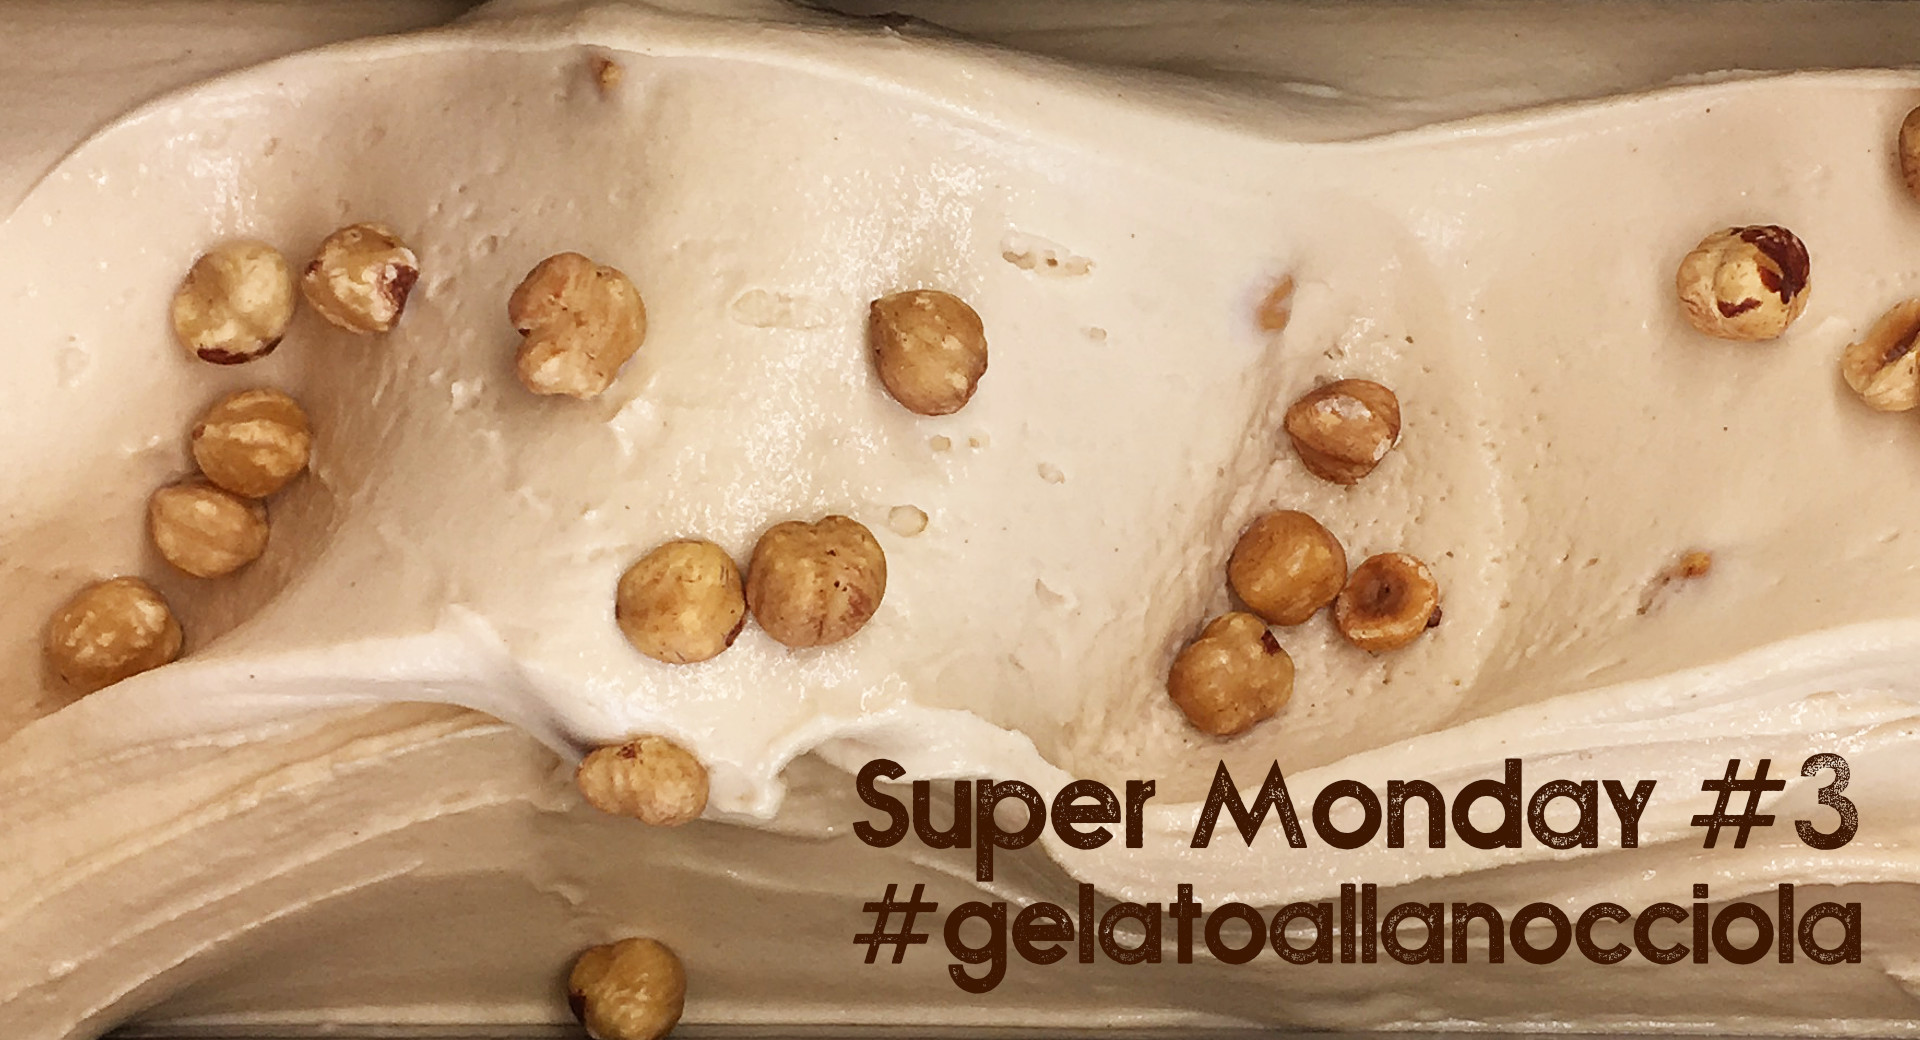 Gelq.it - Super Monday #3 - #hazelnutgelato